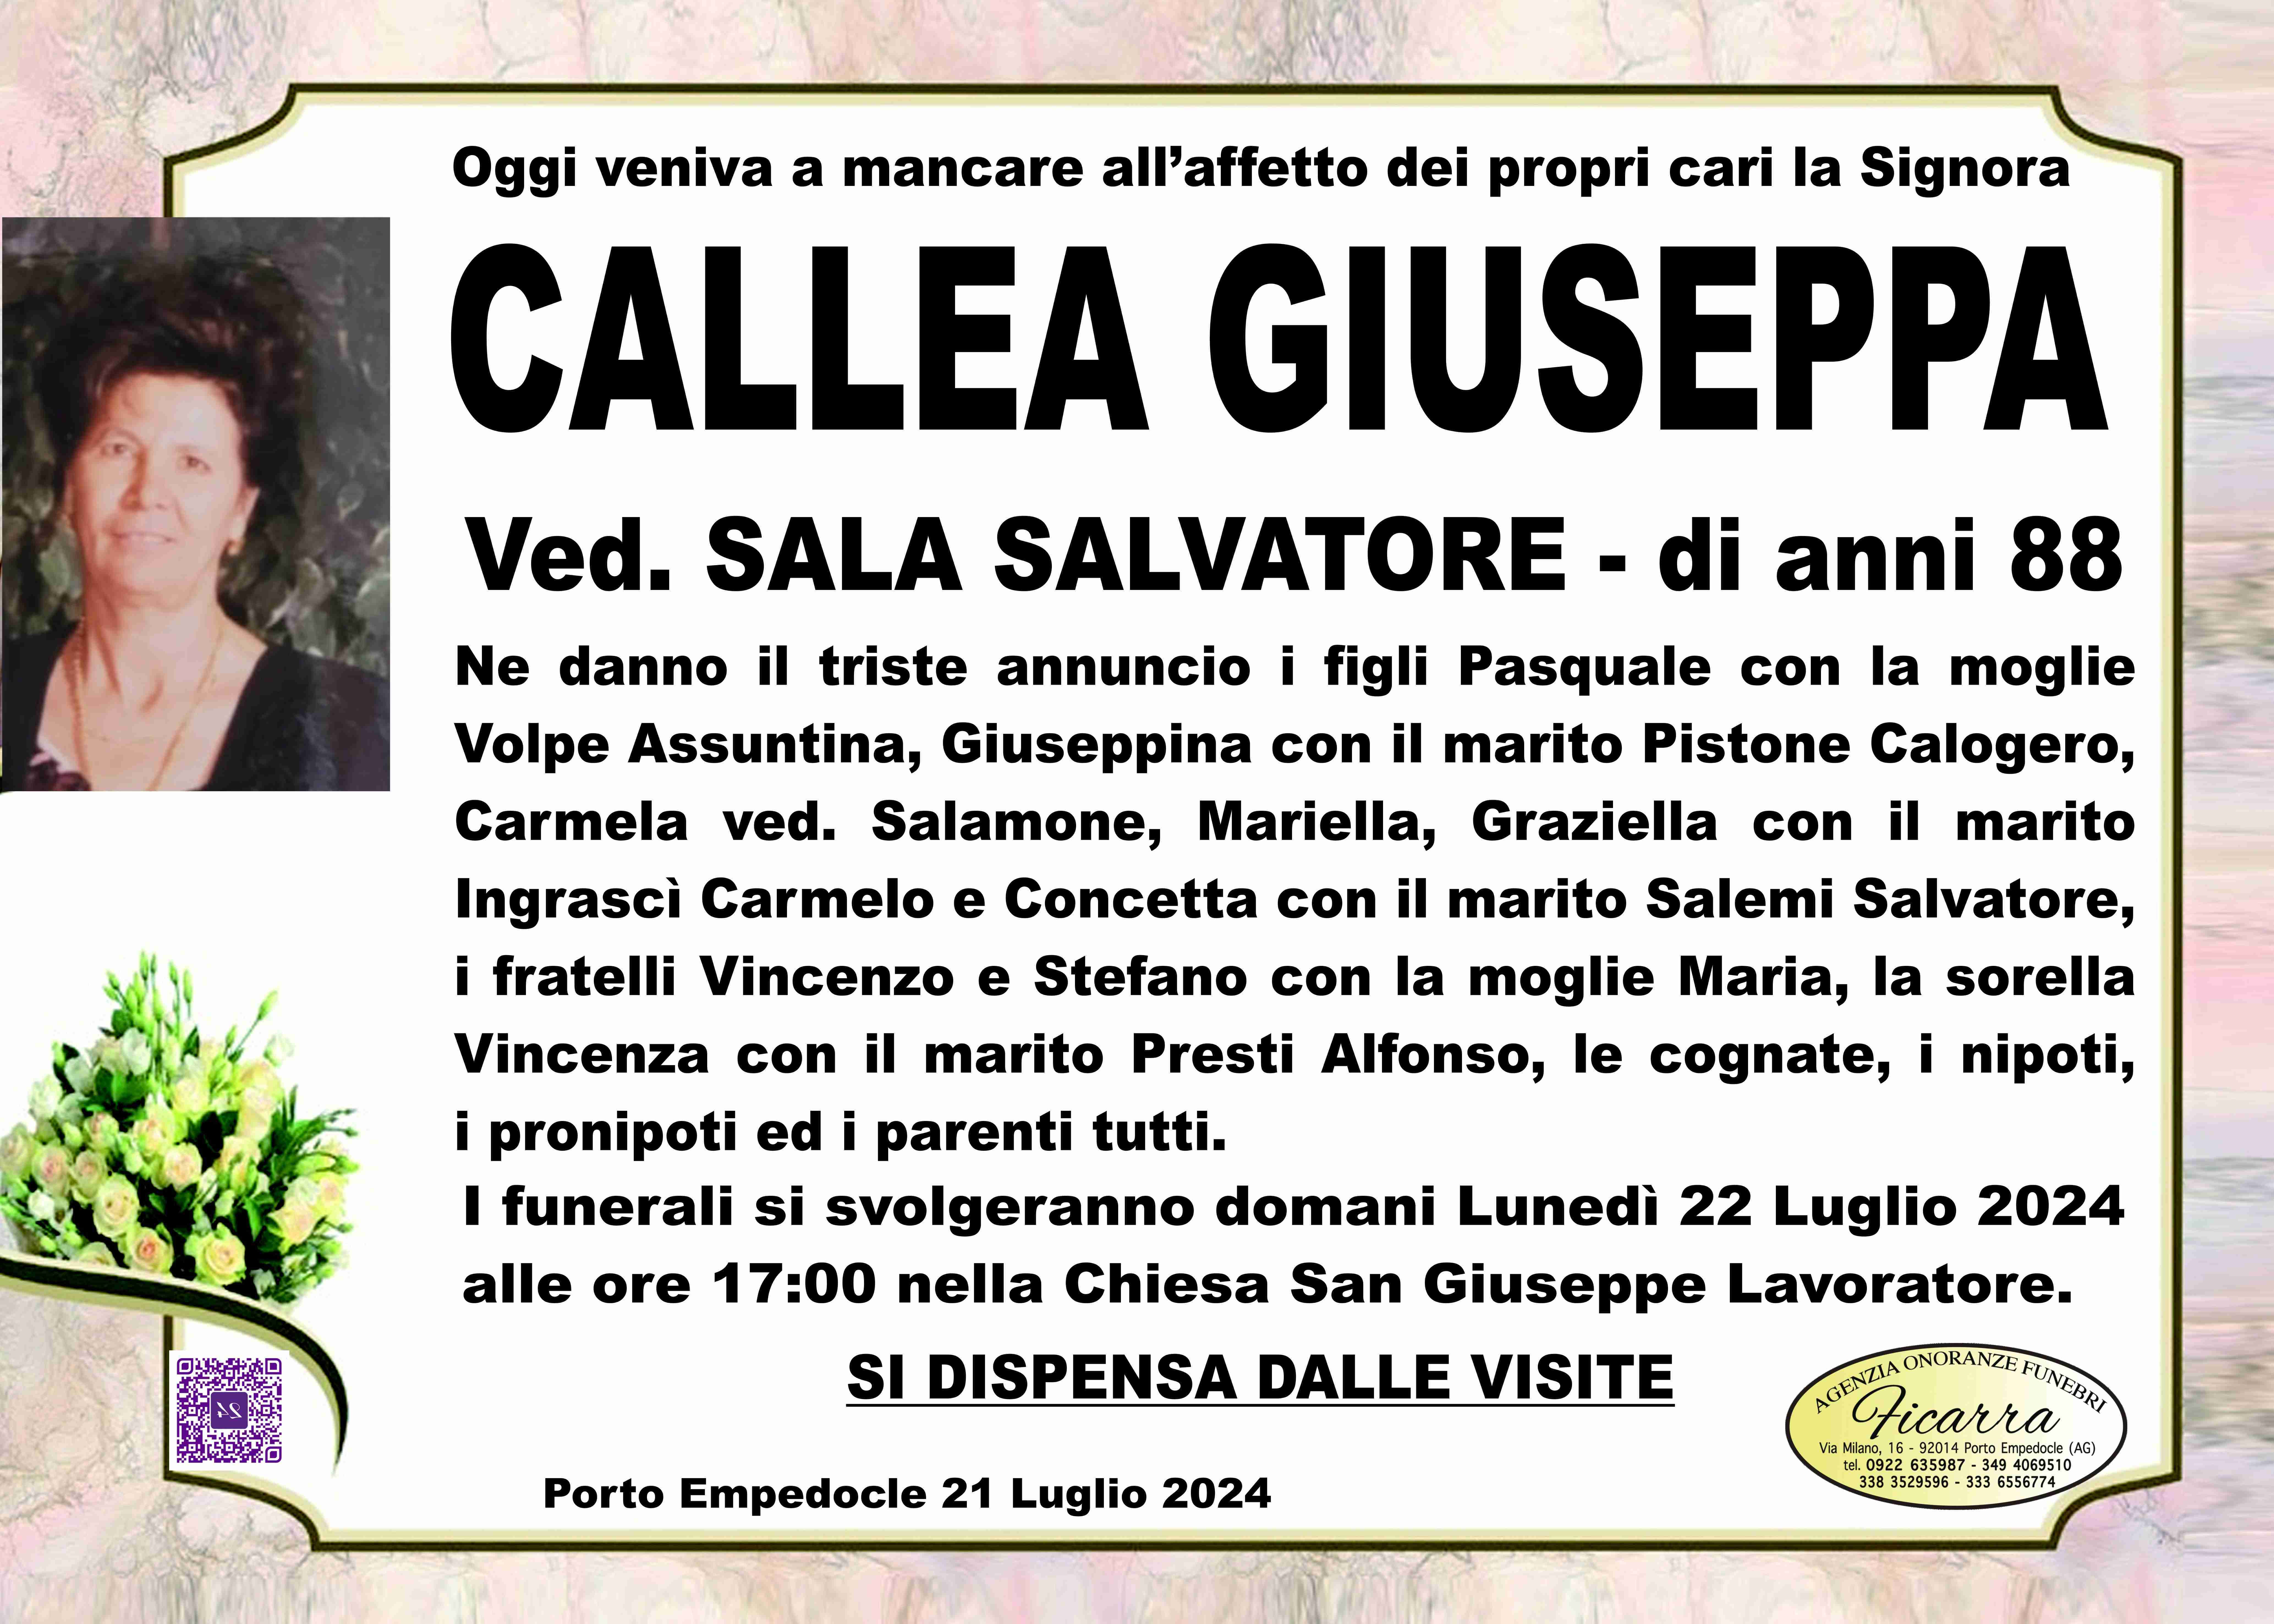 Giuseppa Callea